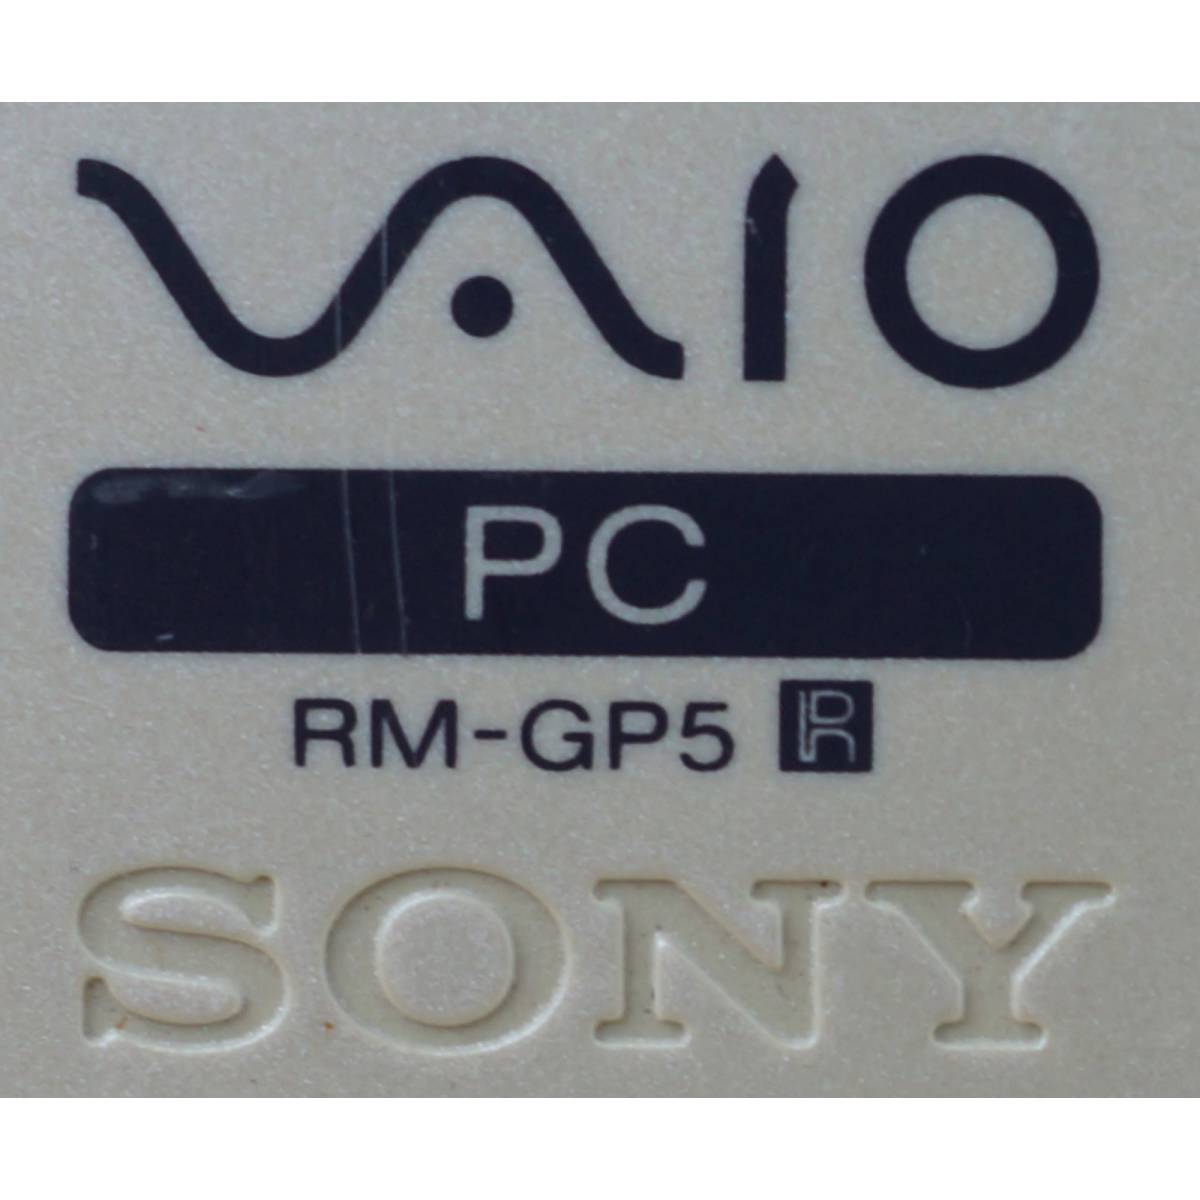  Sony SONY VAIO PC remote control RM-GP5